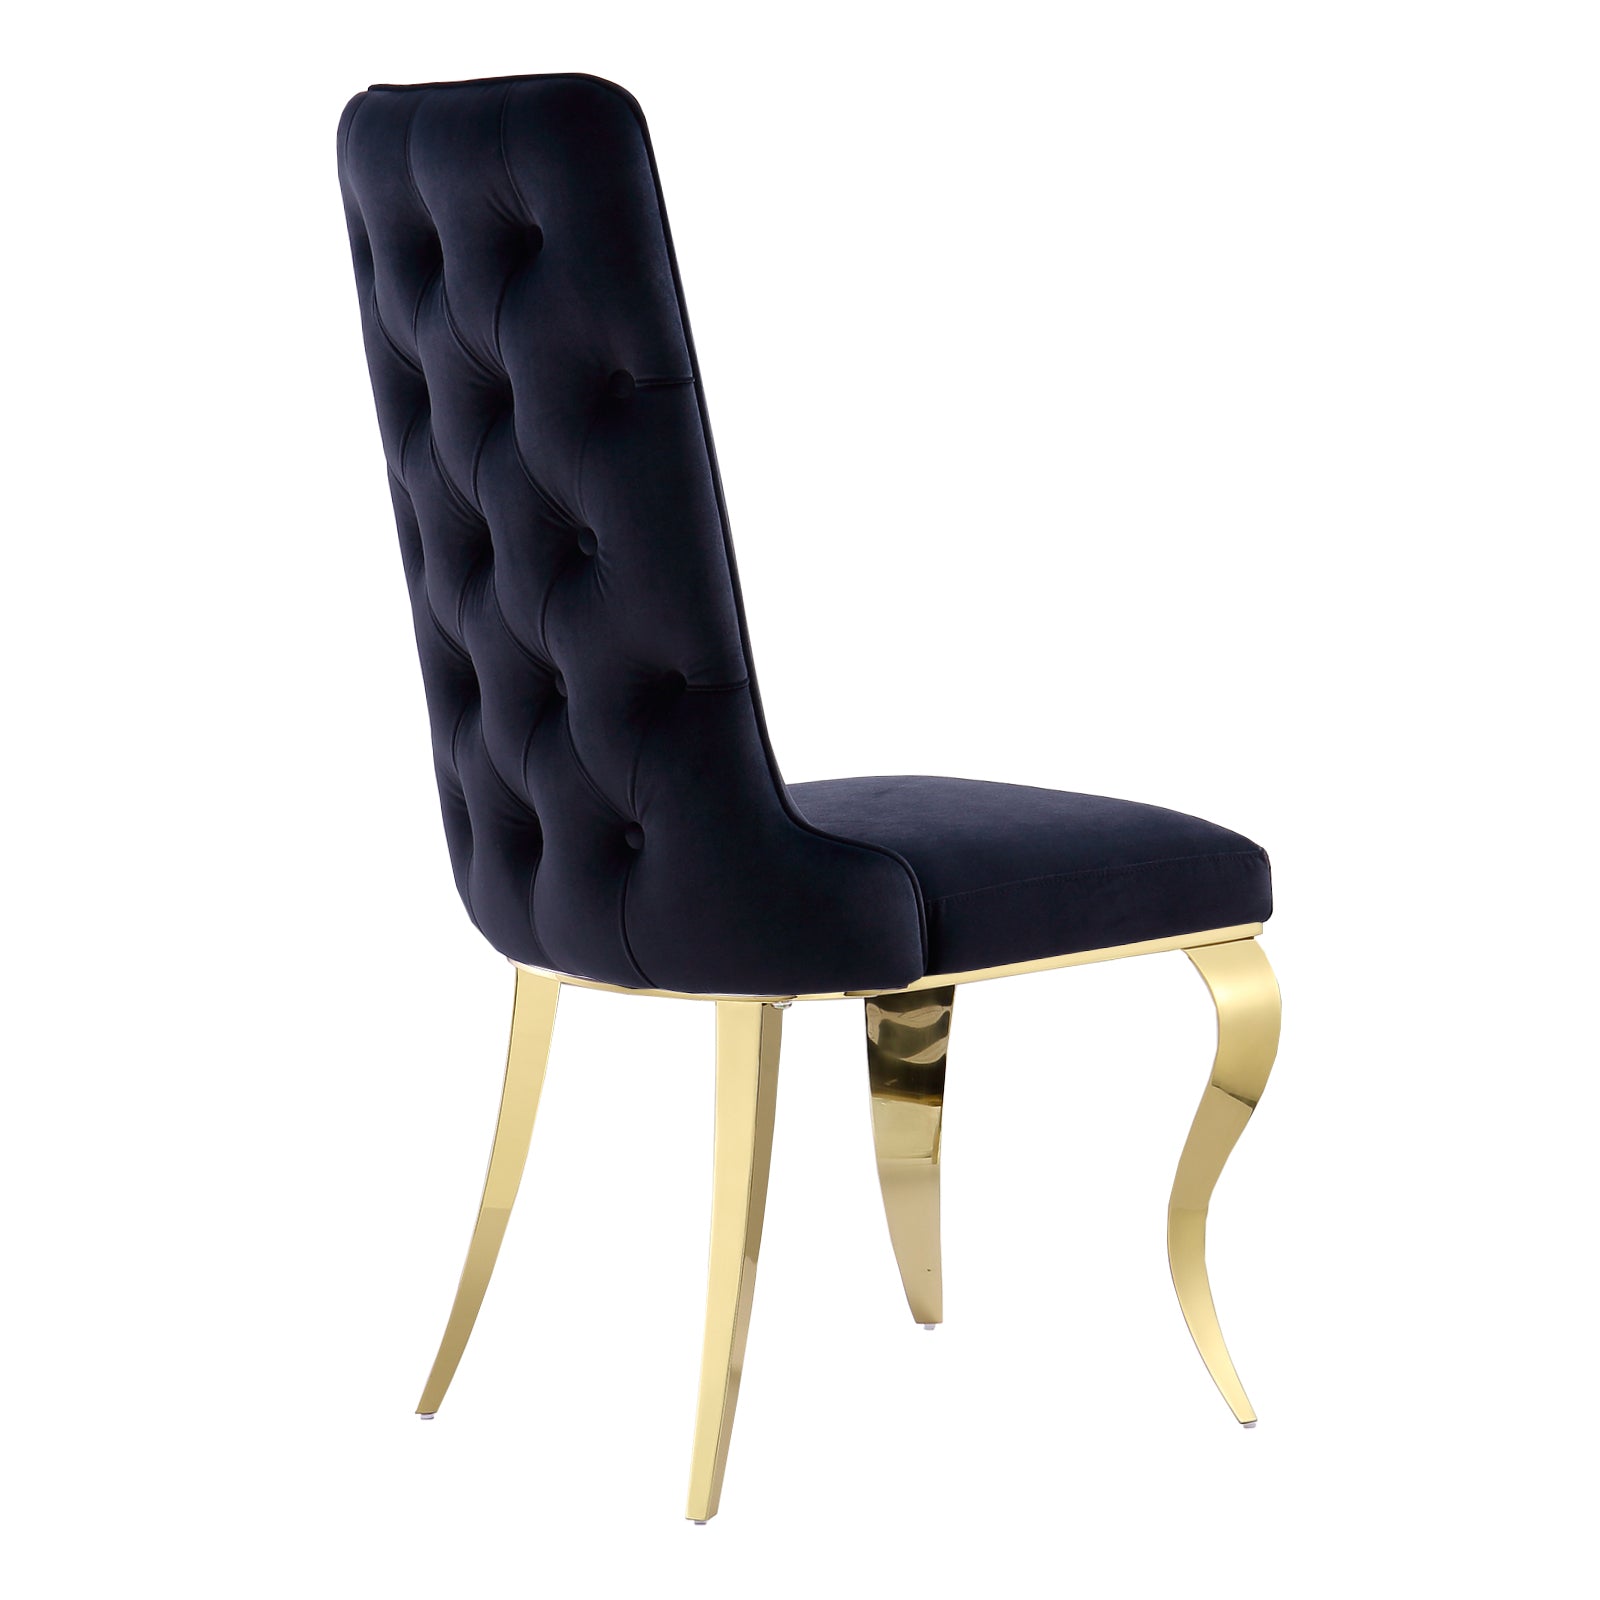 Black velvet Dining Chairs | Button Back | Heavy duty | Gold metal legs | C164